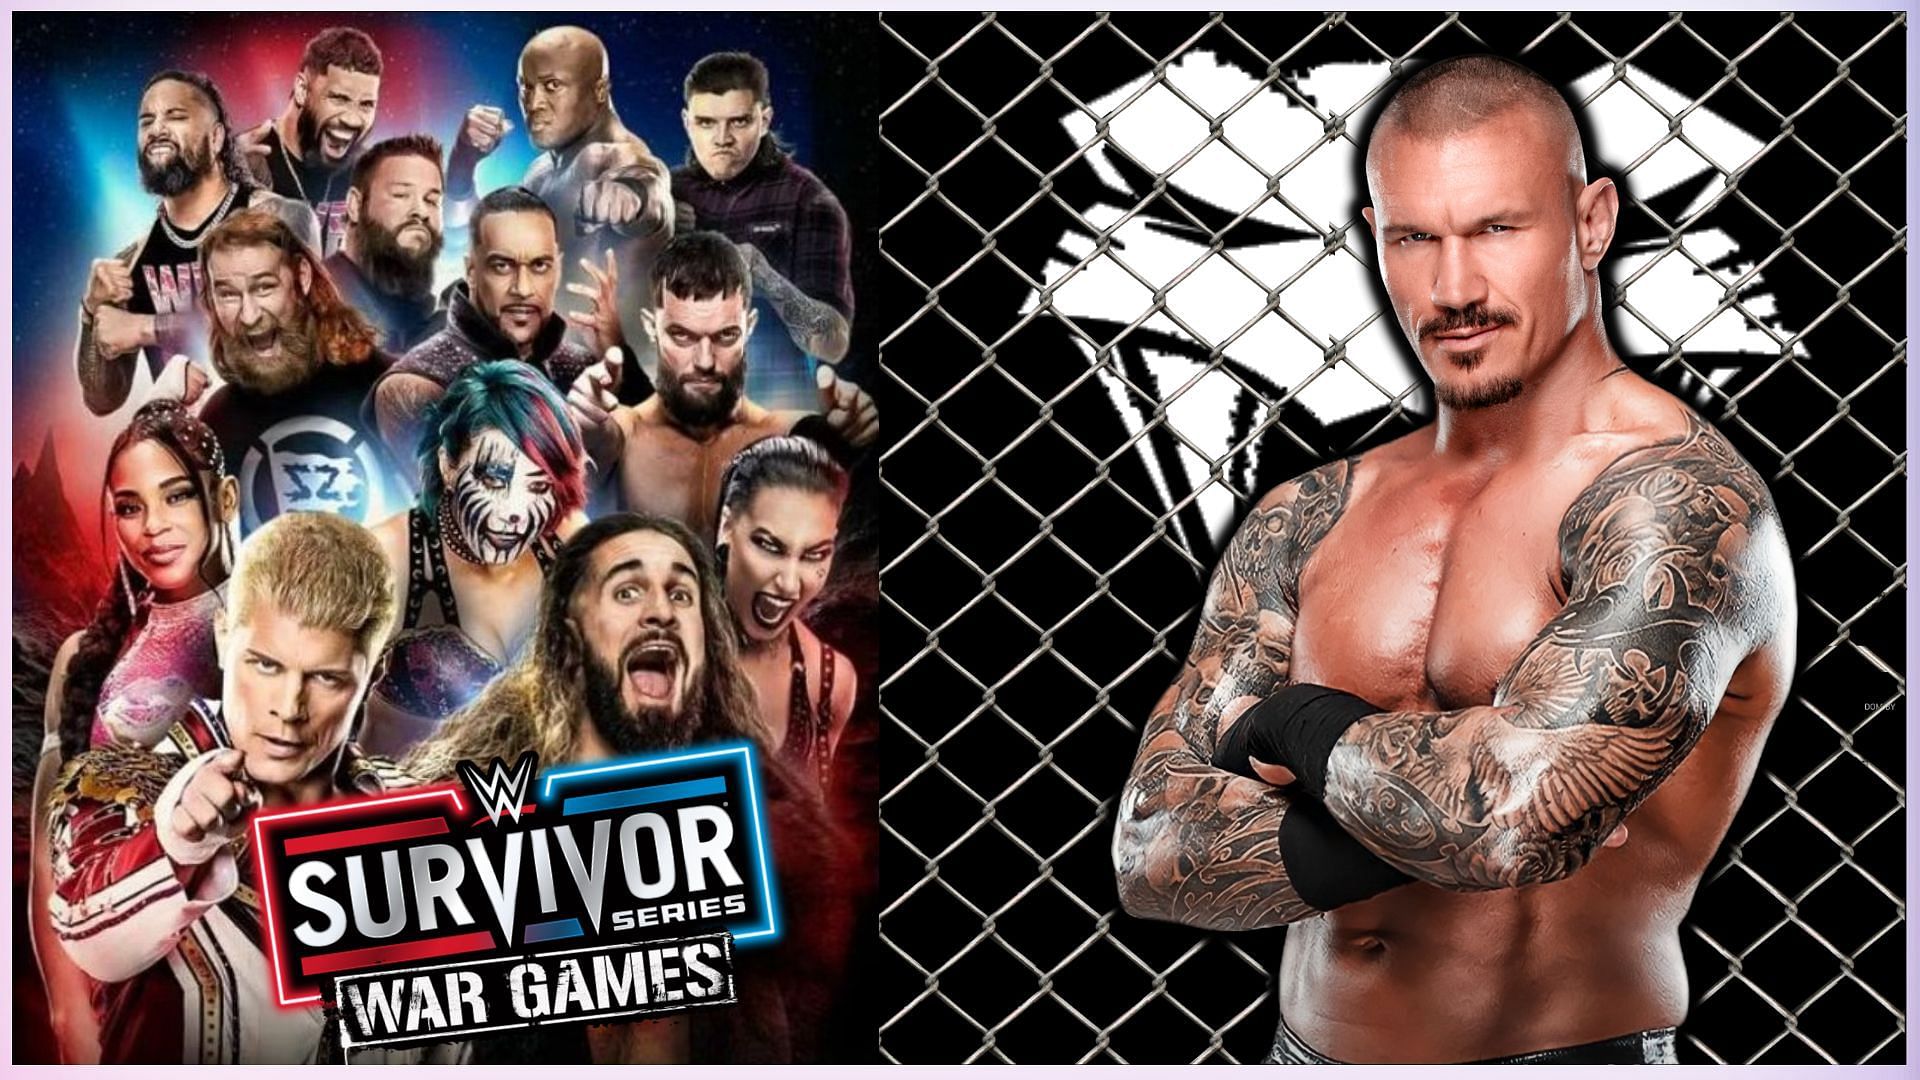 Randy Orton will return to action at Survivor Series